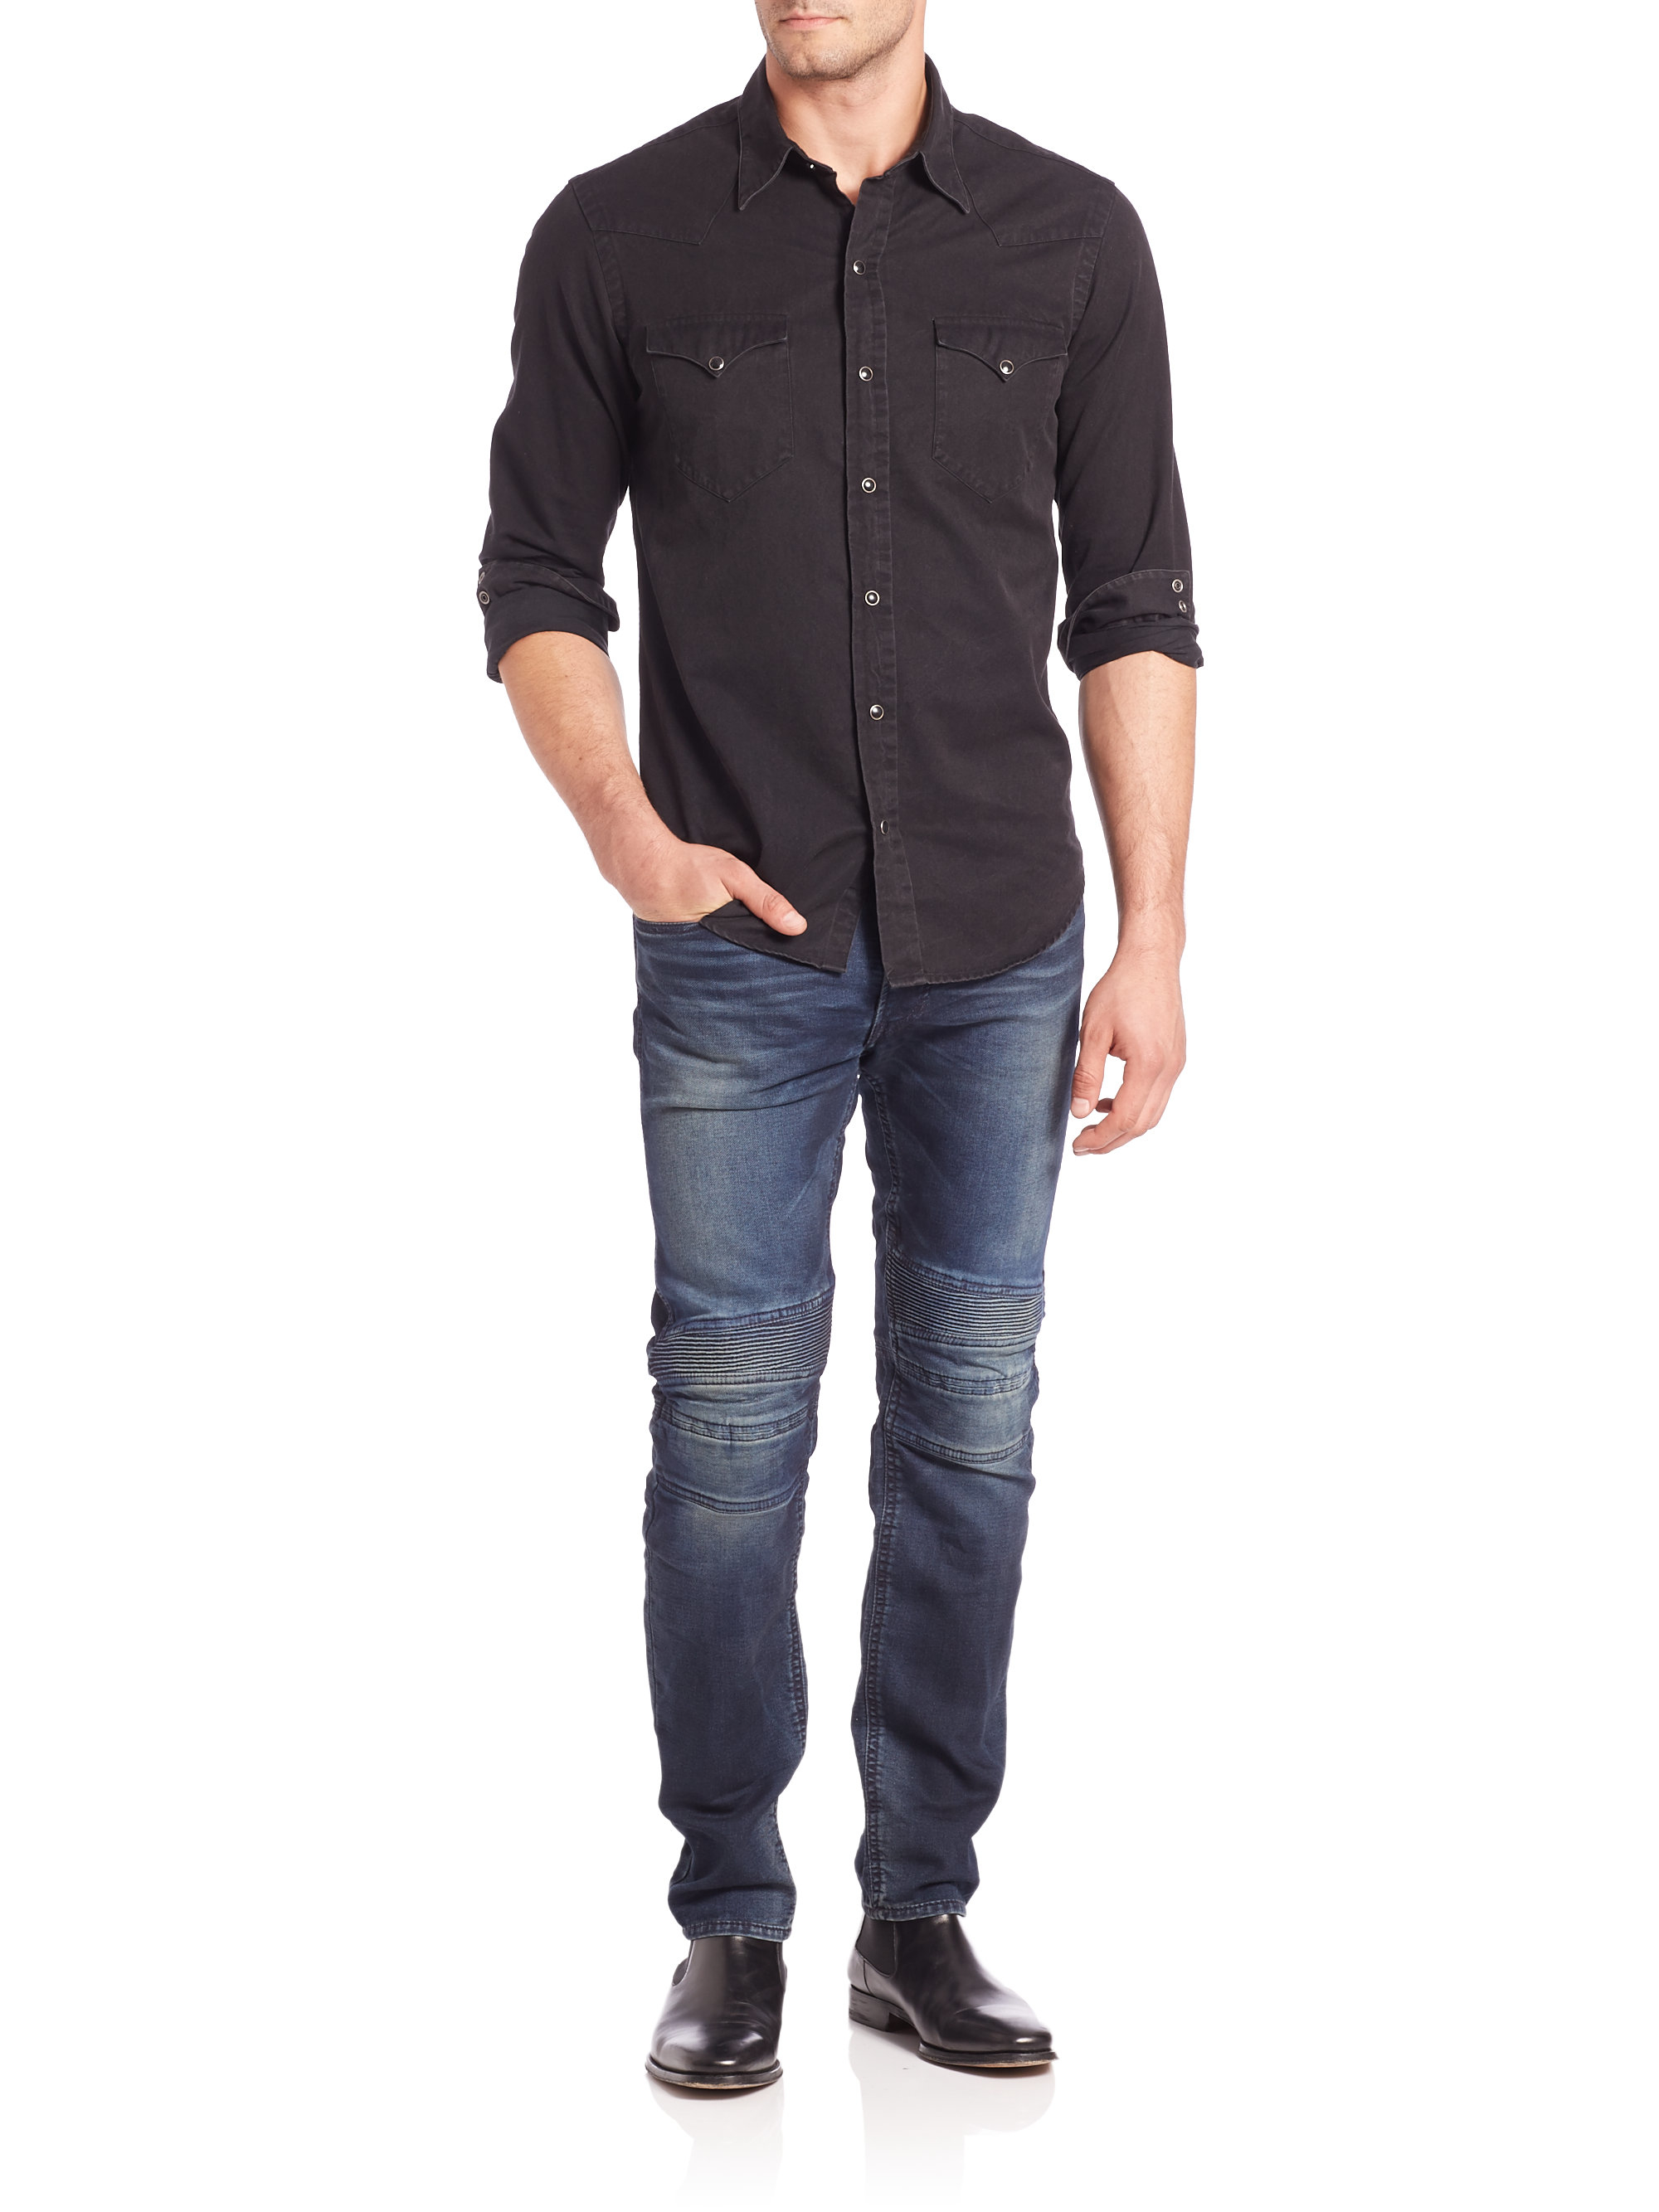 Ralph Lauren Black Label Denim Western Shirt in Black for Men - Lyst